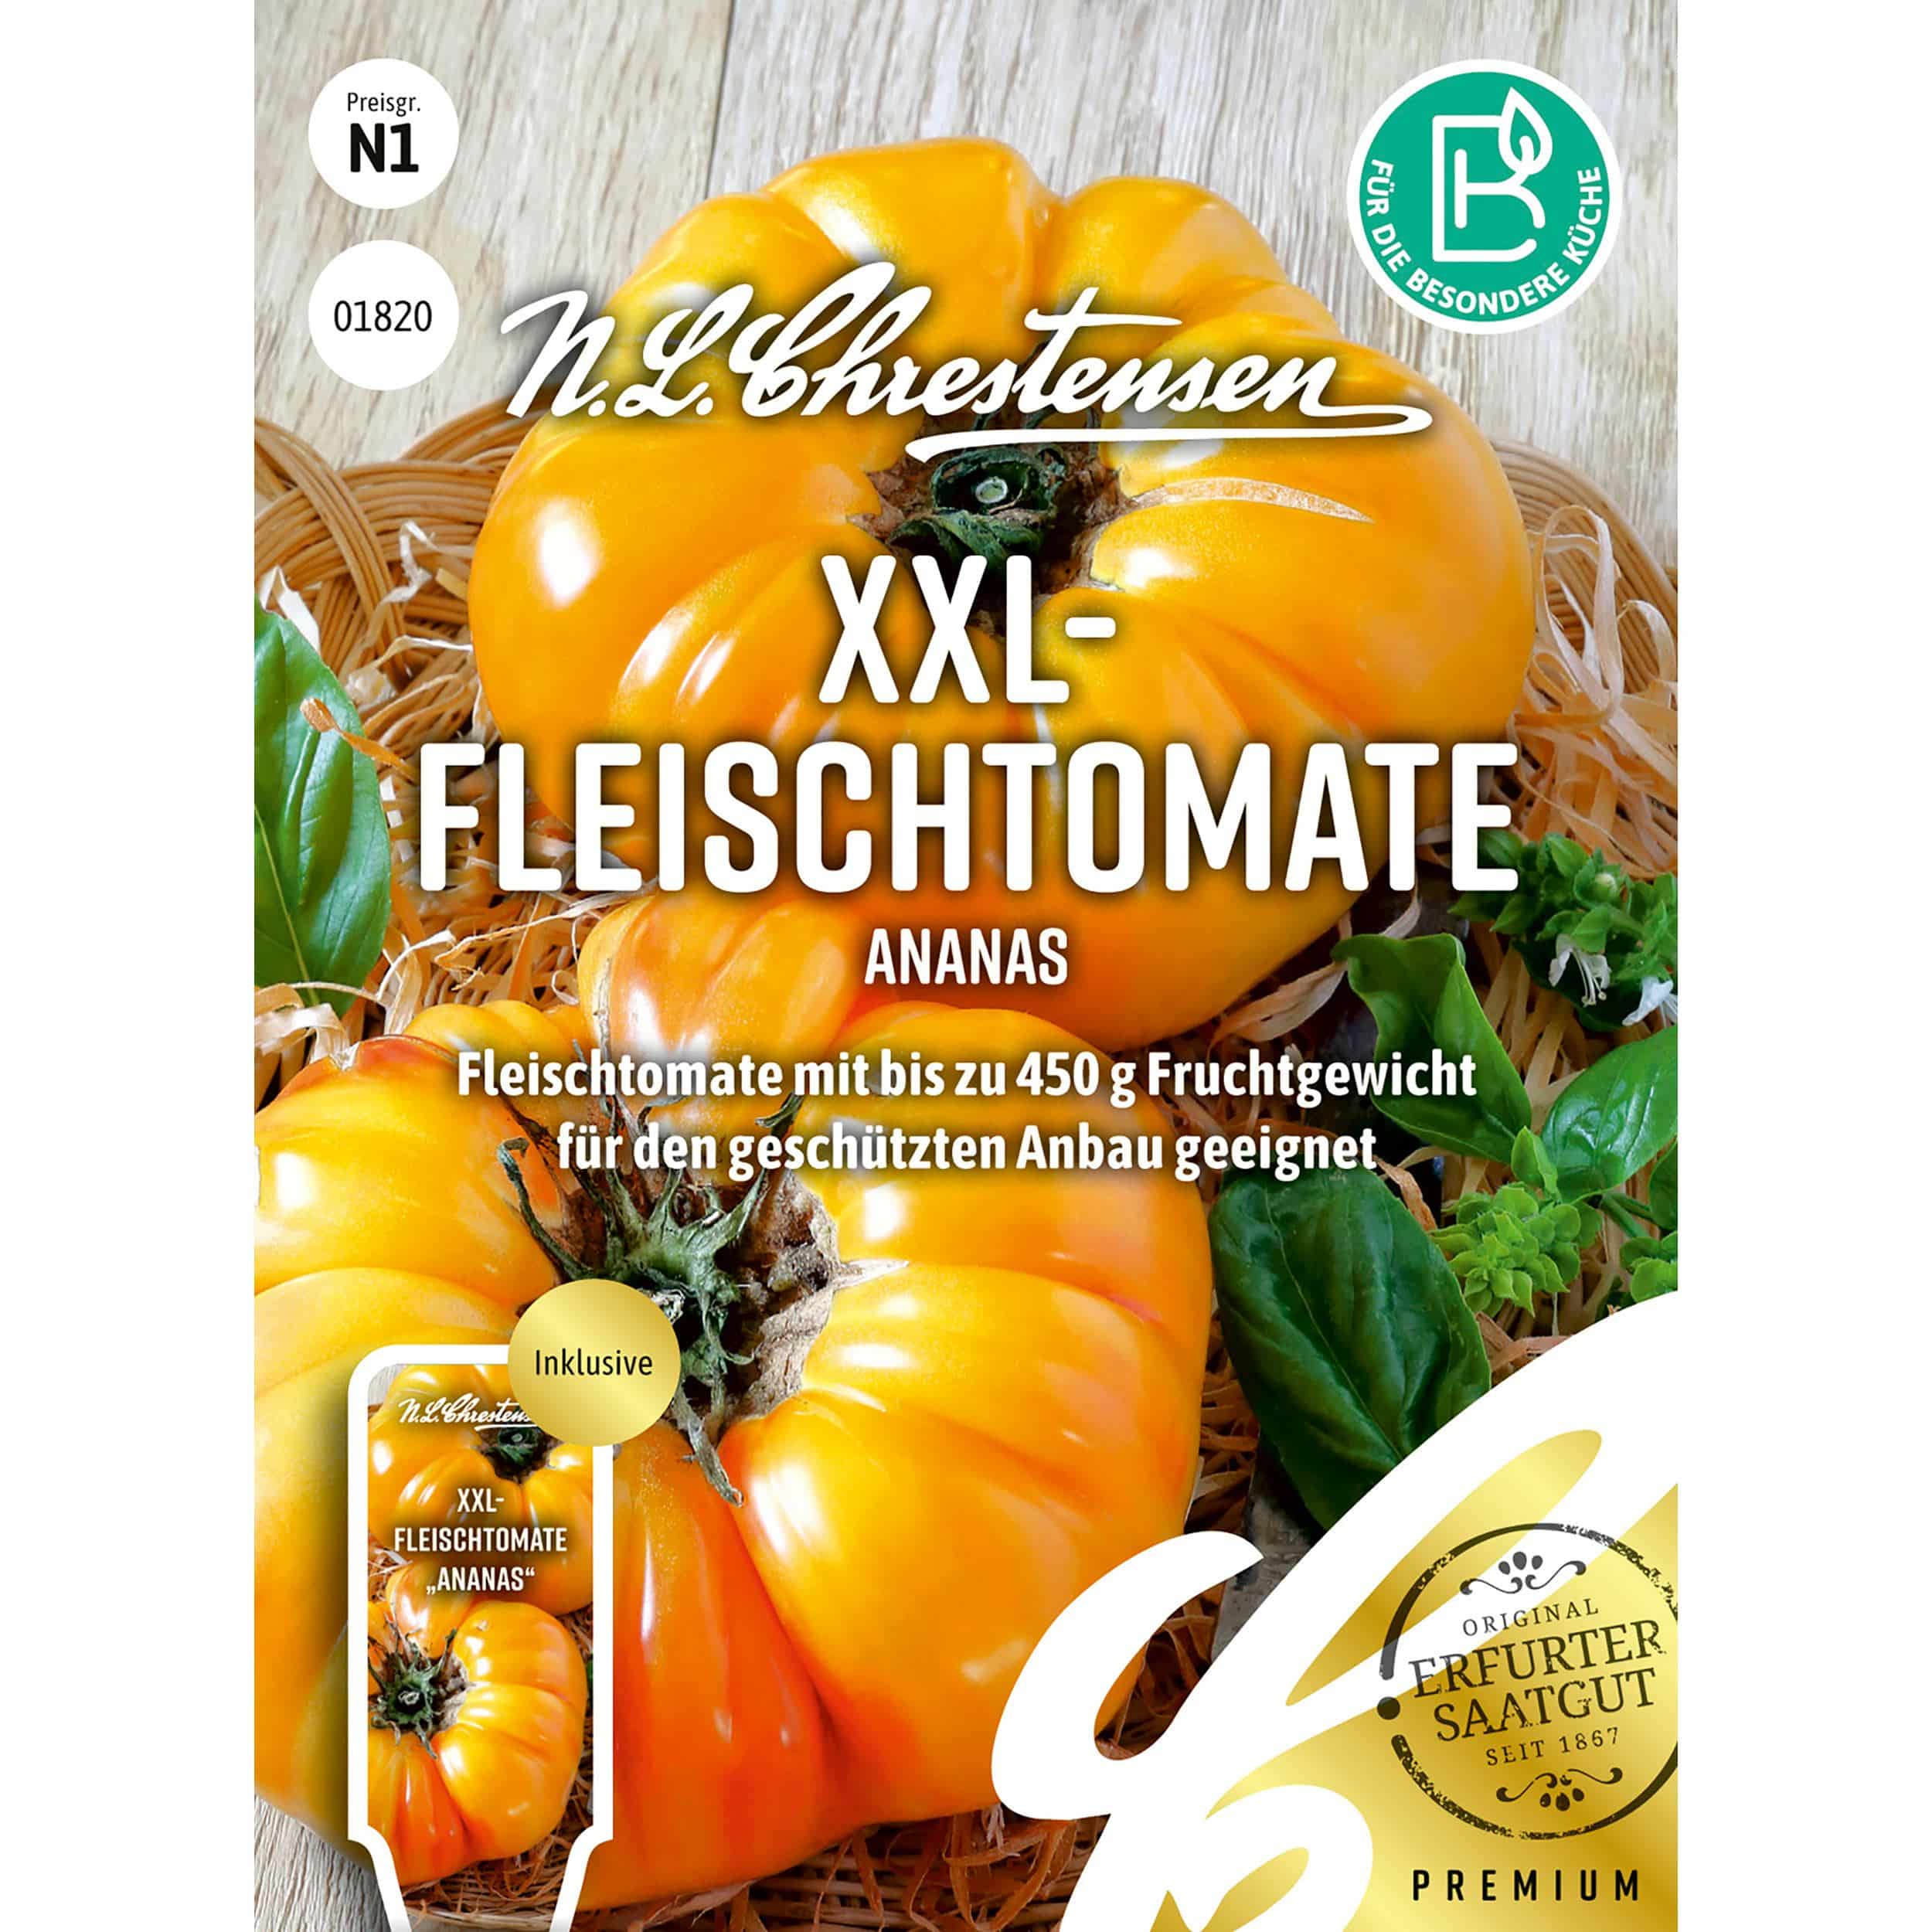 XXL-
Fleischtomate Ananas